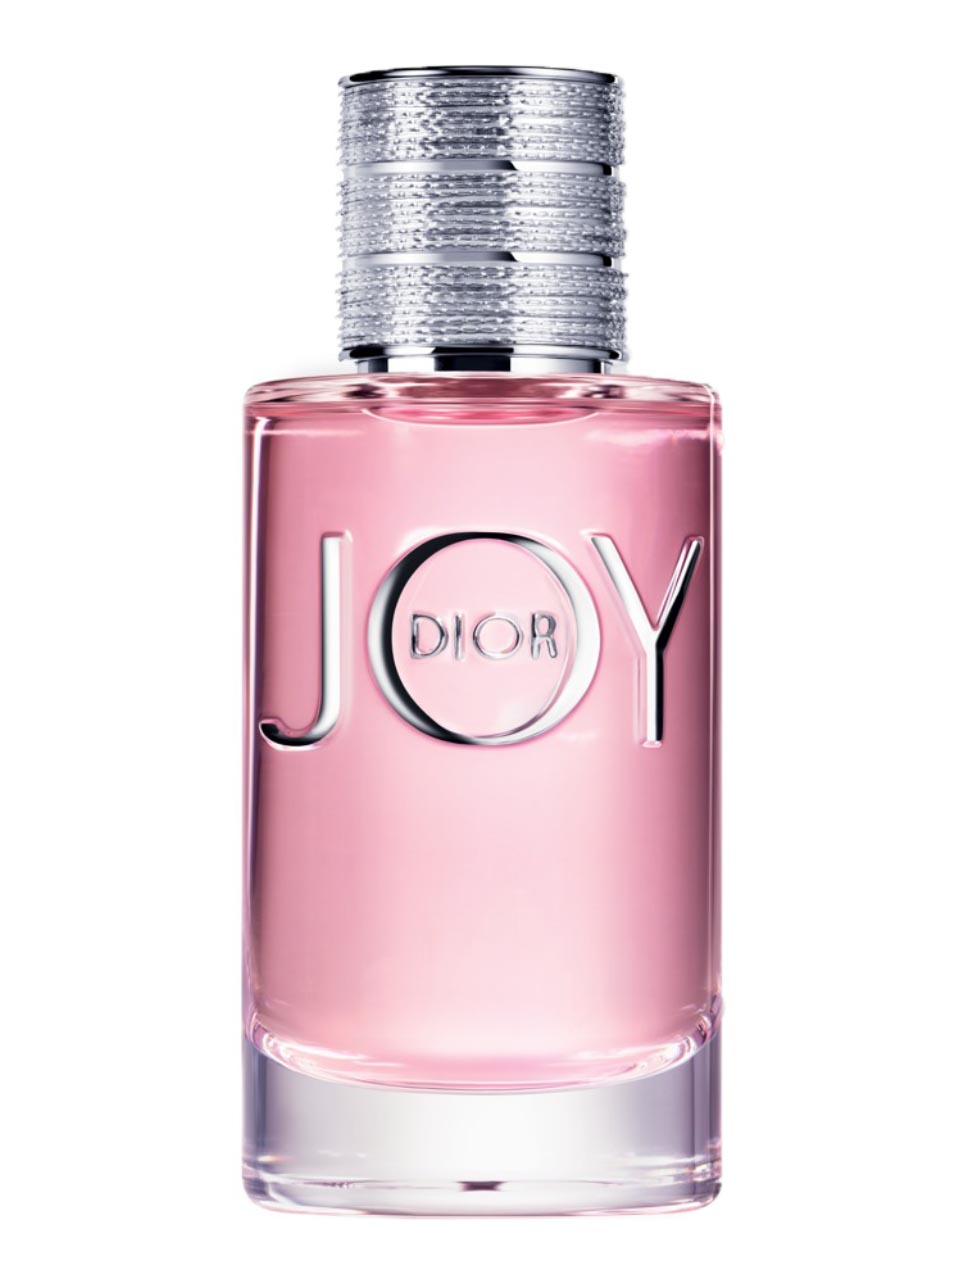 Dior Joy Eau de Parfum 90 ml null - onesize - 1